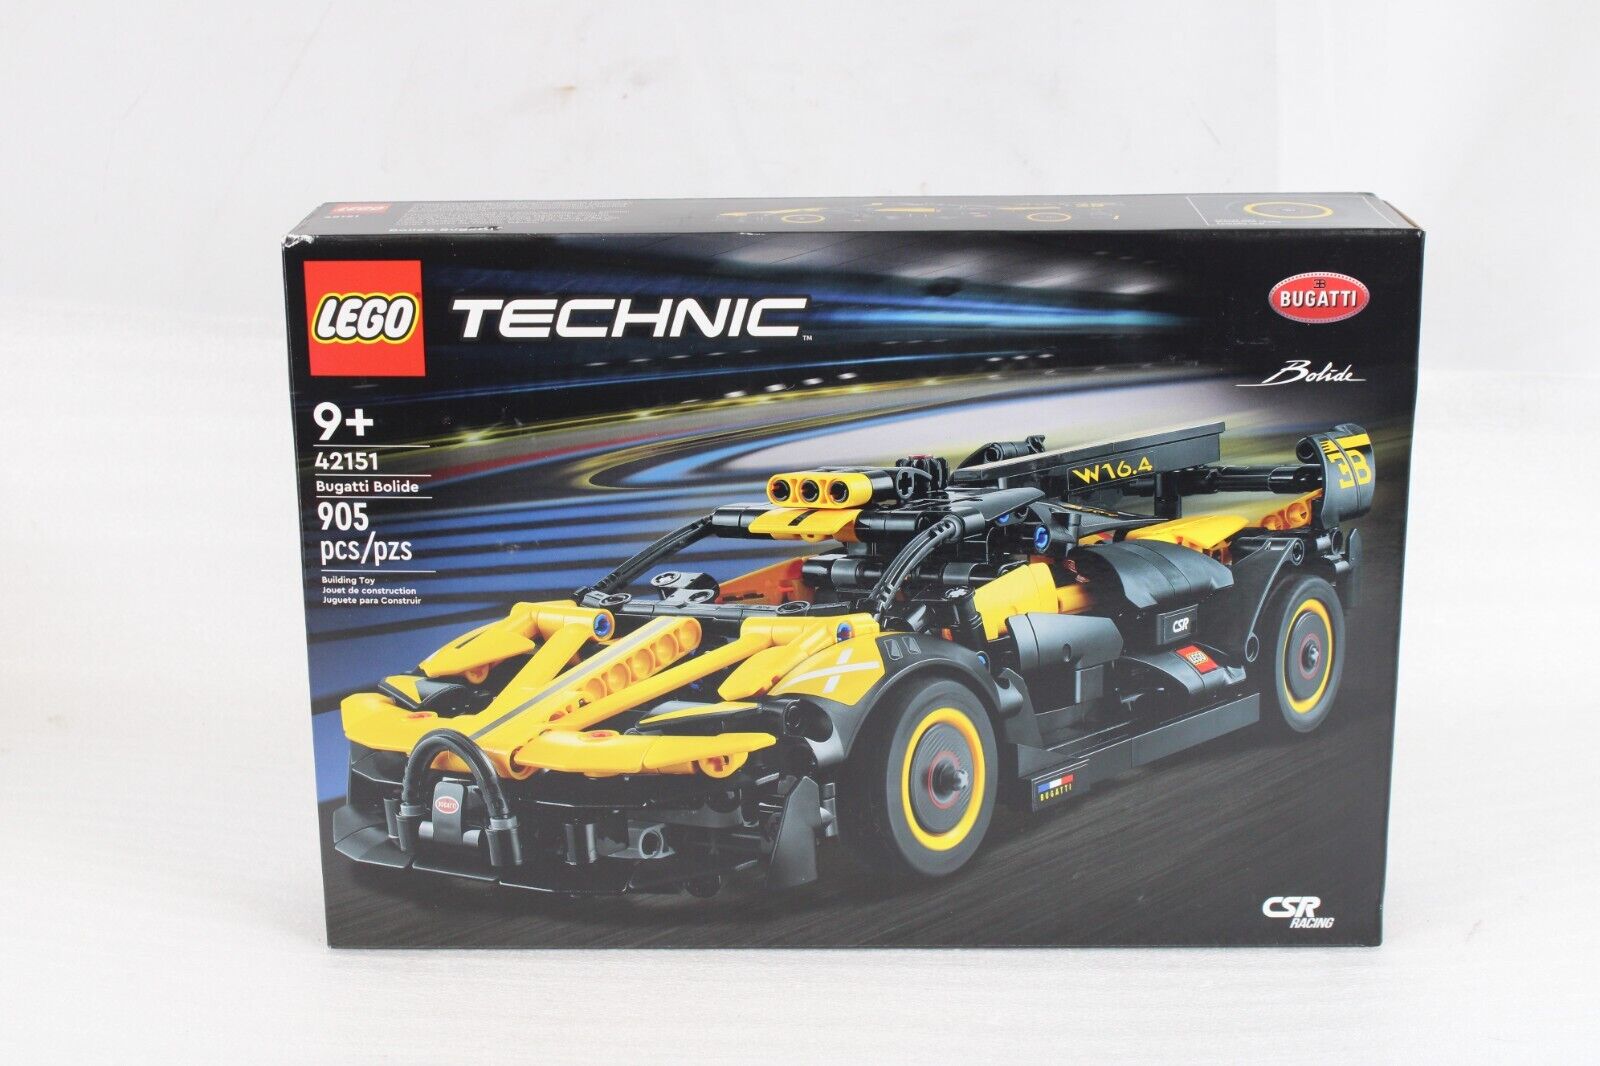 ❤ Lego 42151 Technic Bugatti Bolide *TRUSTED SELLER* Ships Double Boxed